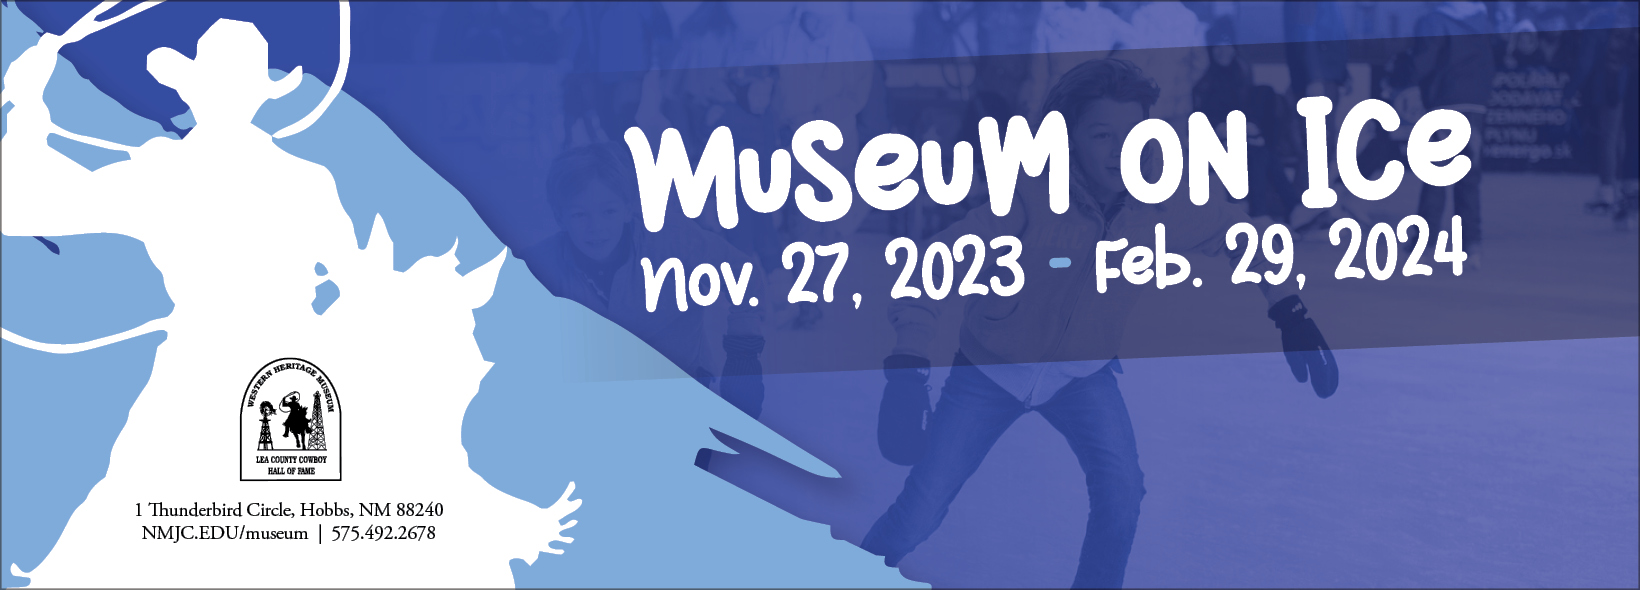 Western Heritage Museum on Ice 2023 - 2024